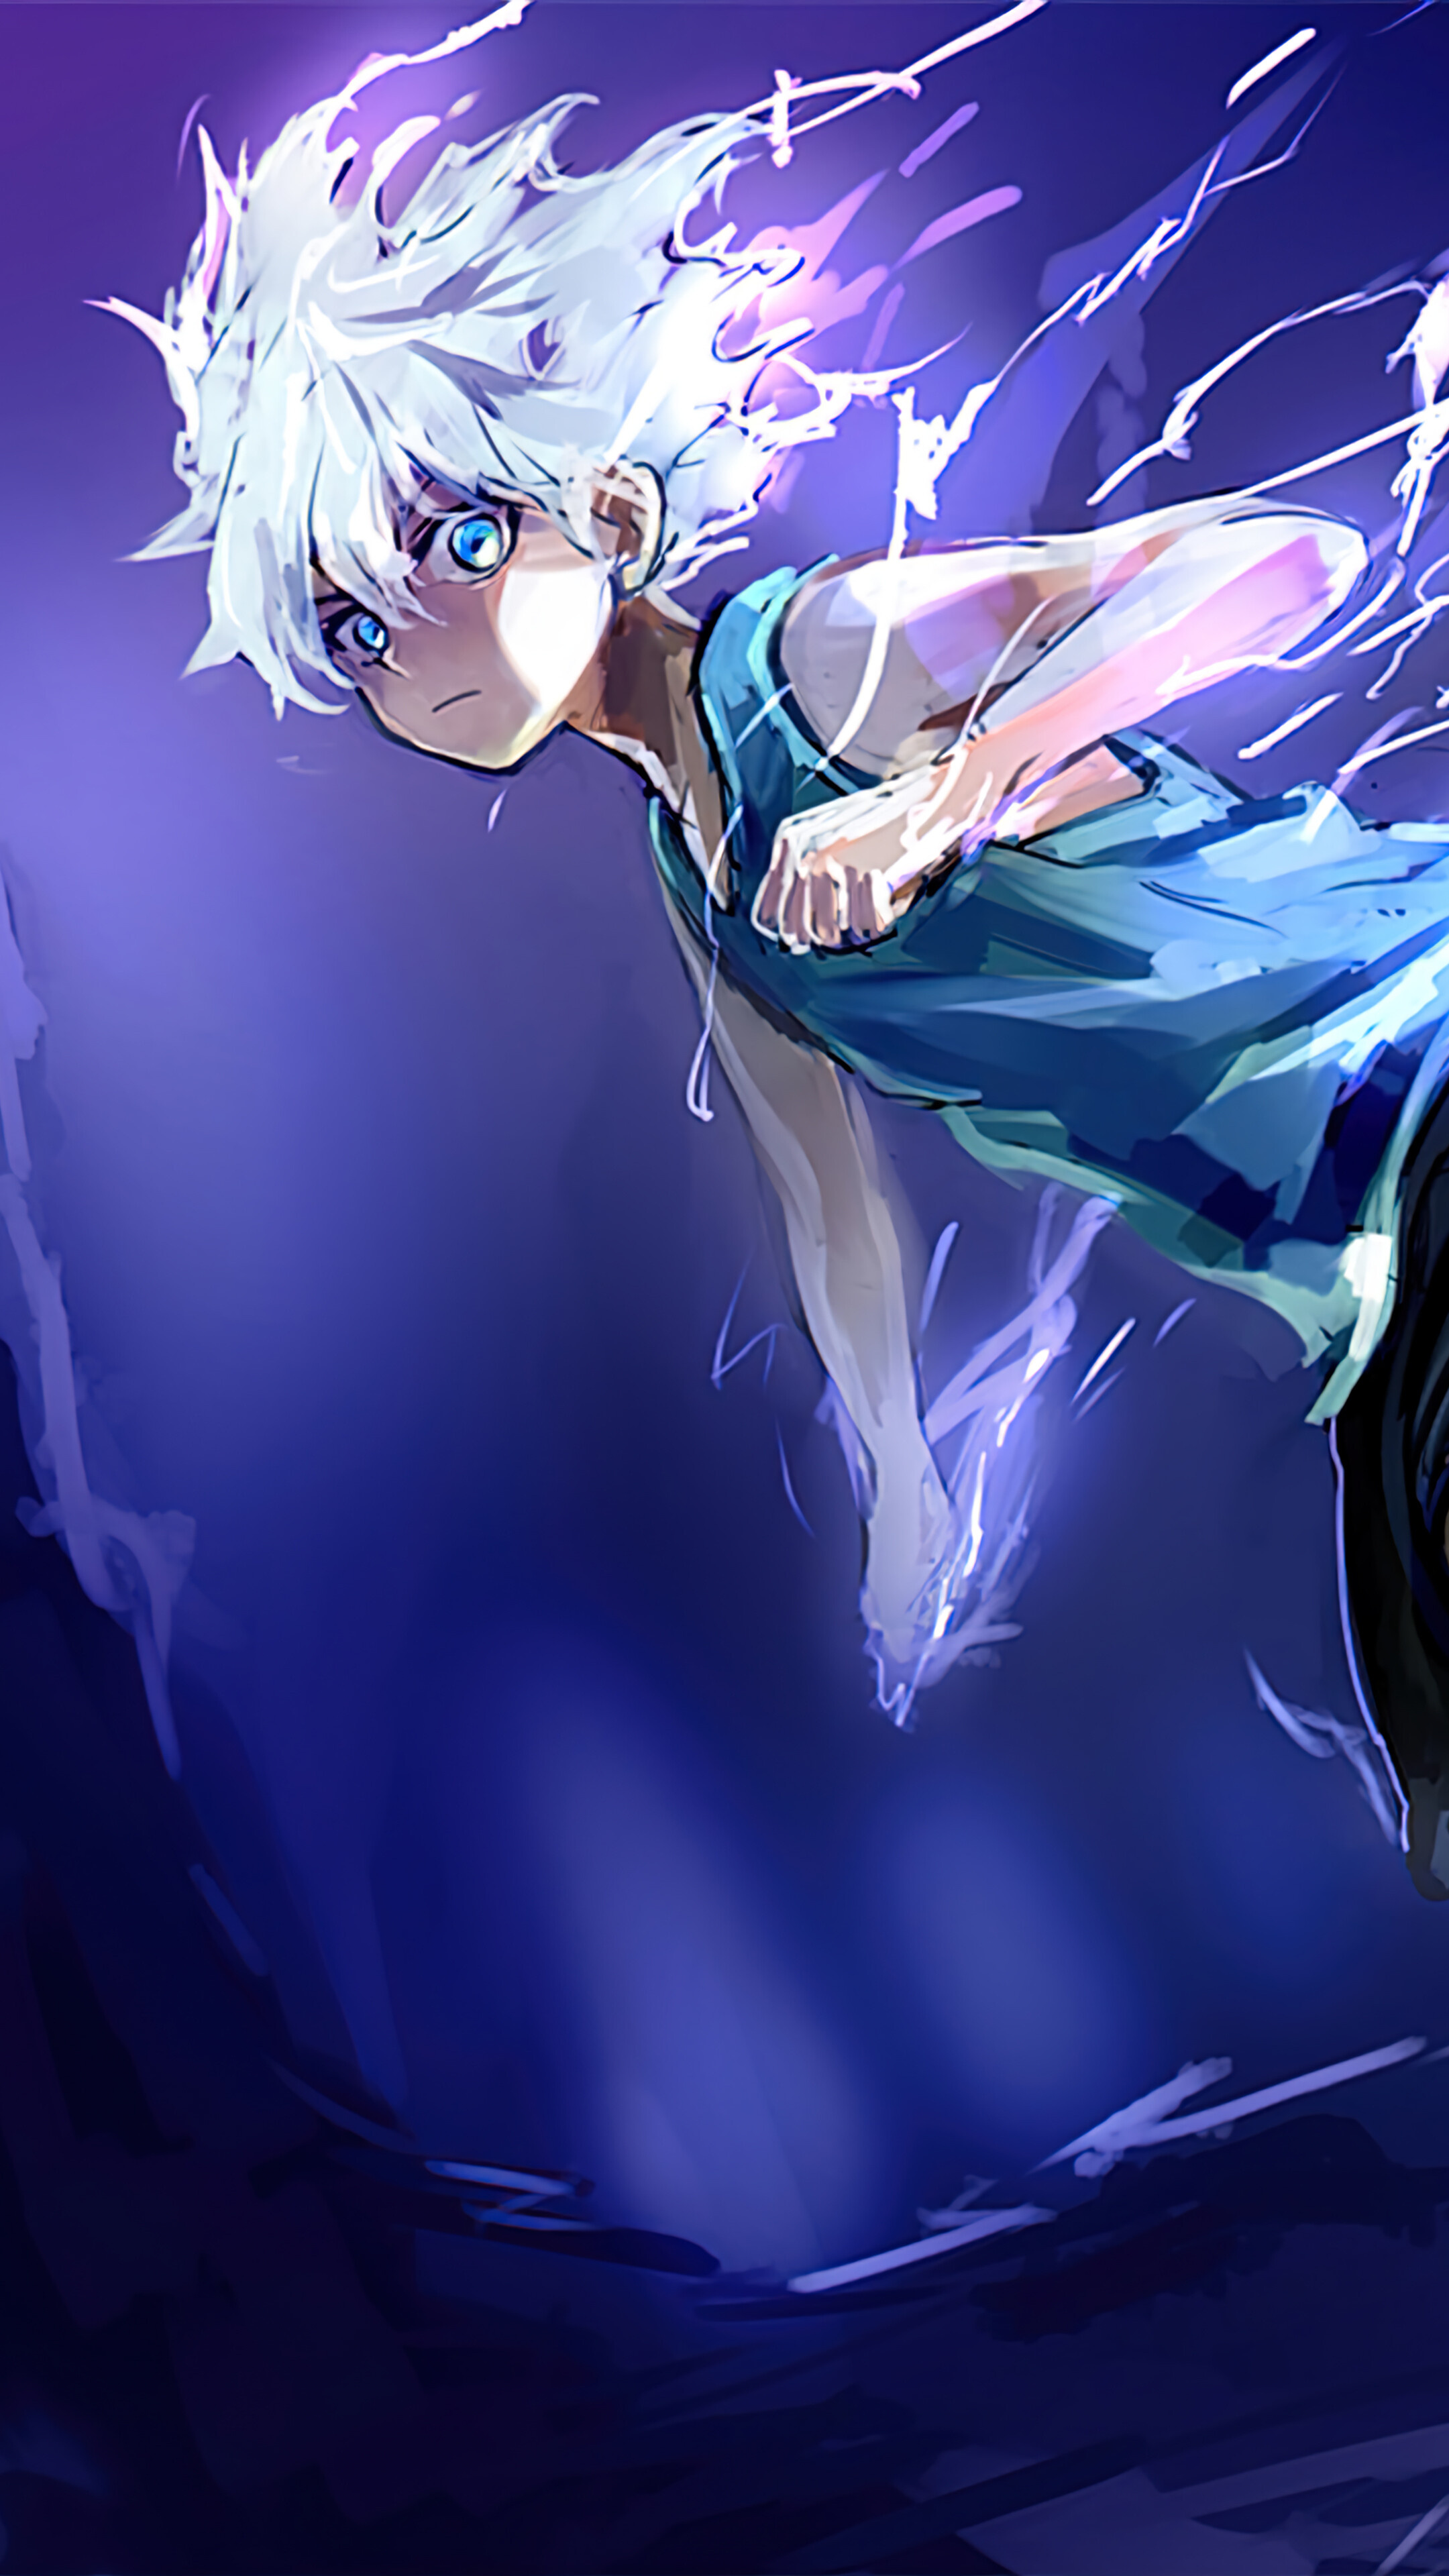 Killua, Anime character, Lightning powers, PC desktop wallpaper, 2160x3840 4K Handy